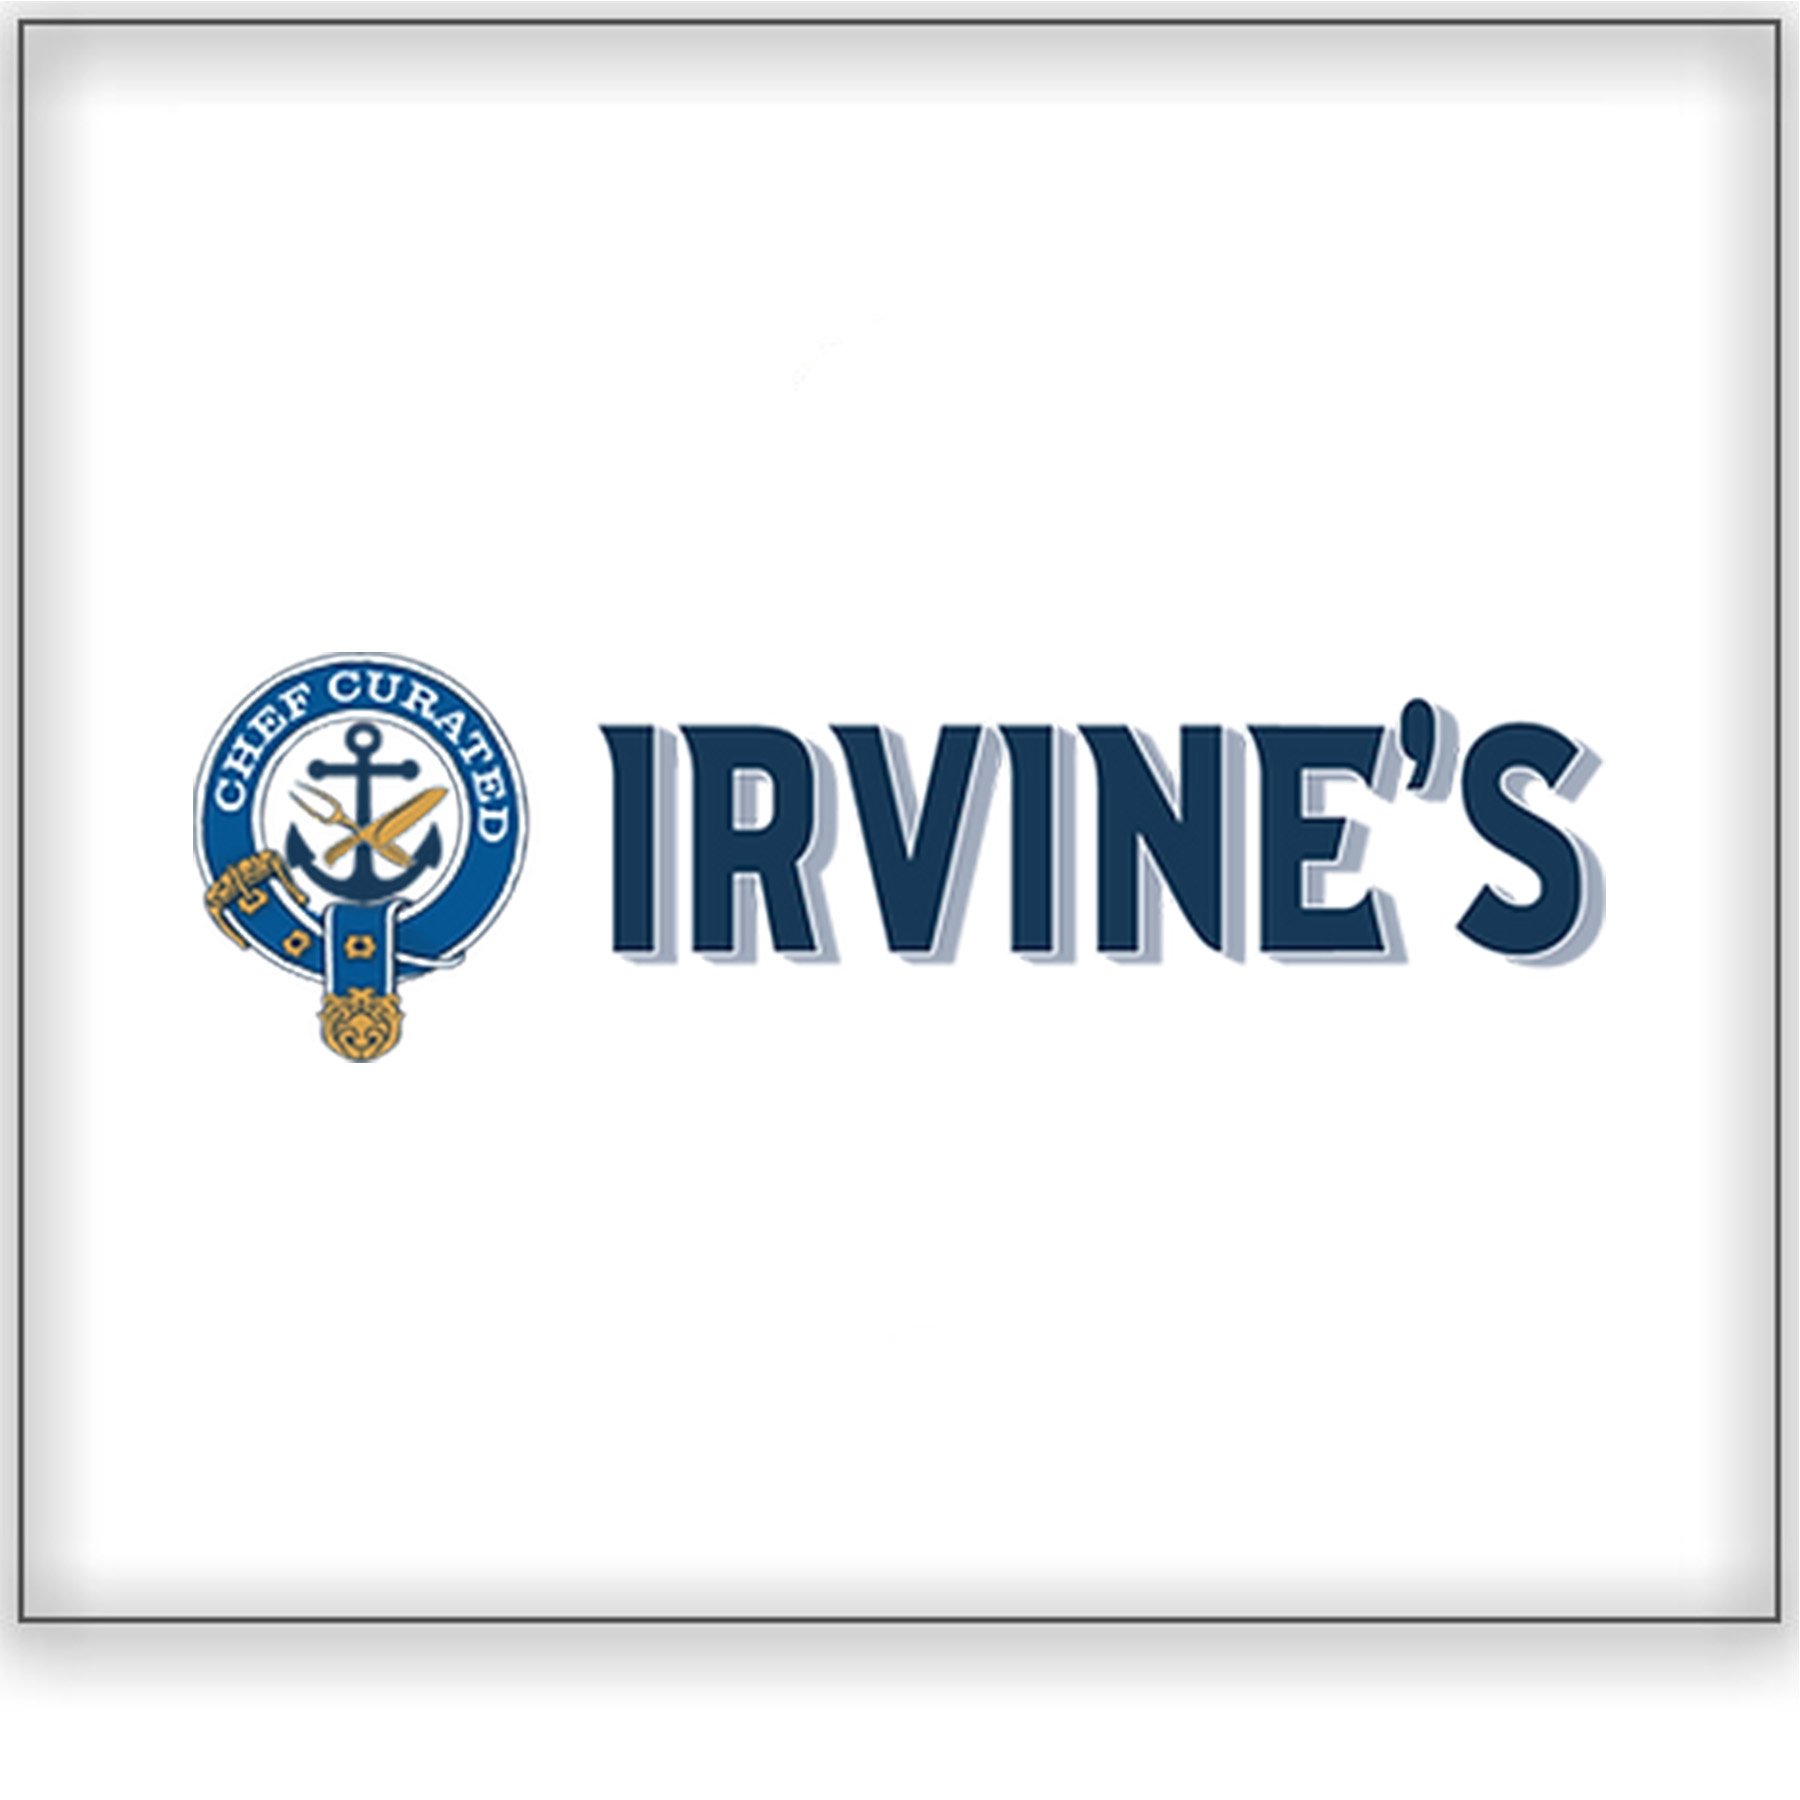 Irvine's Spirits&lt;a href=/irvines-spirits&gt;Pennsylvania, USA ➤&lt;/a&gt;